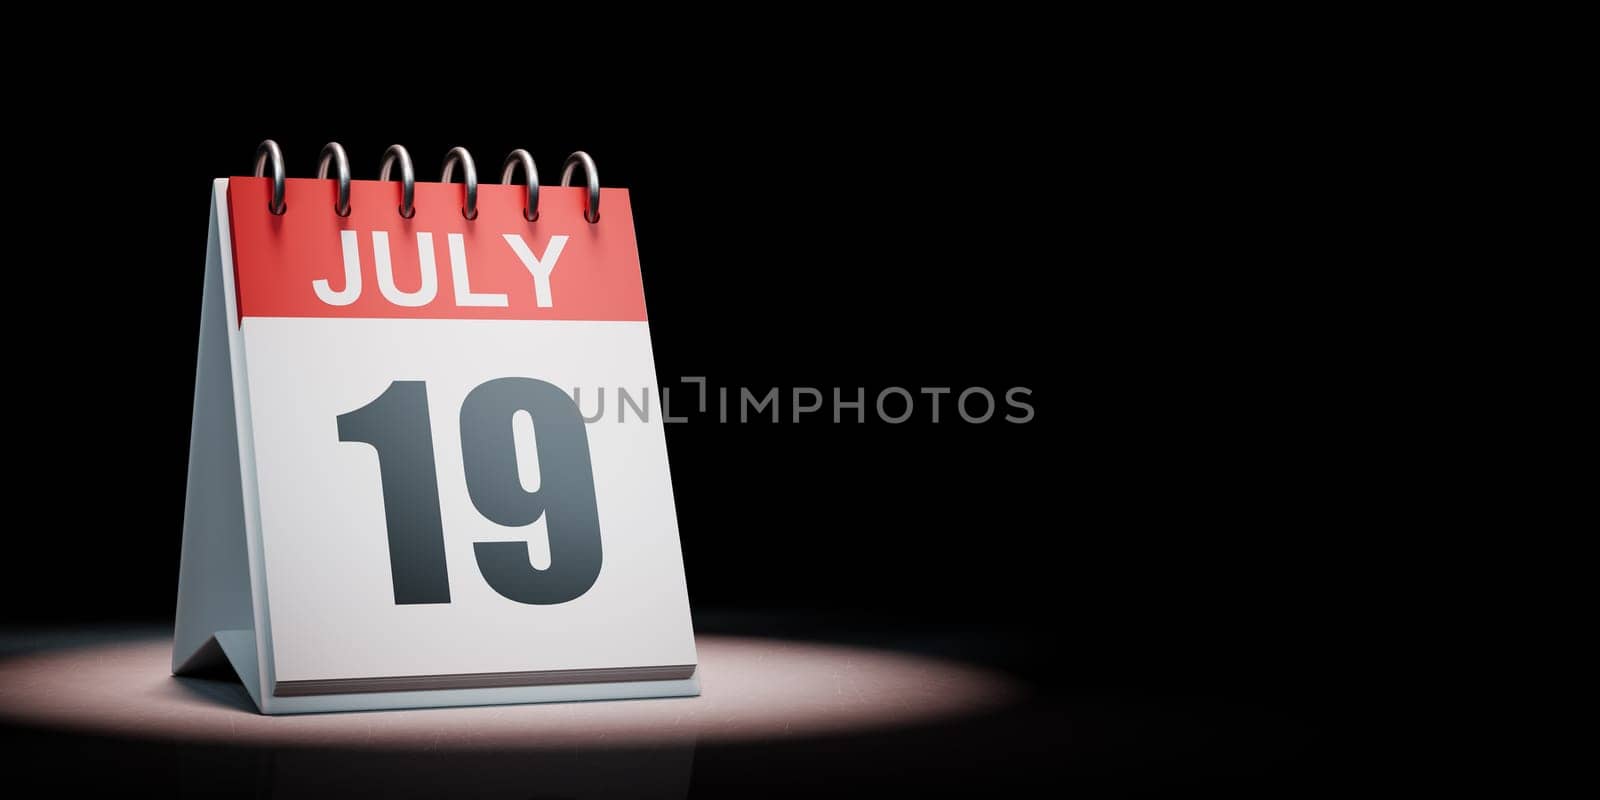 July 19 Calendar Spotlighted on Black Background by make